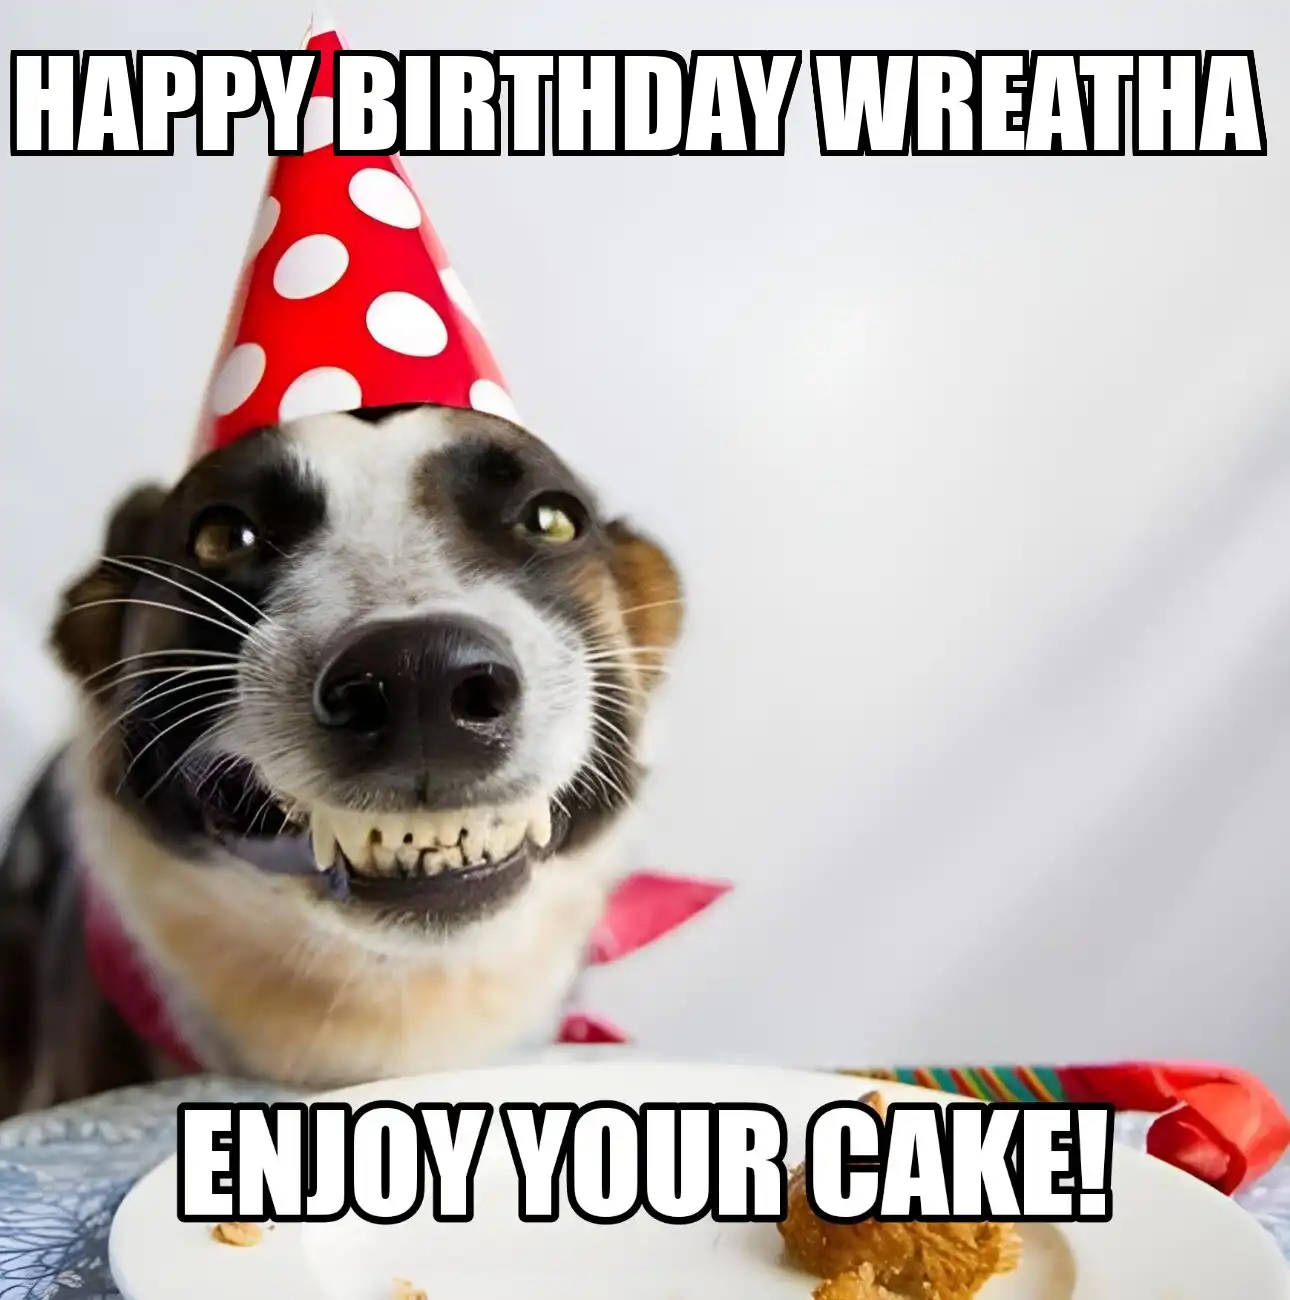 Happy Birthday Wreatha Enjoy Your Cake Dog Meme